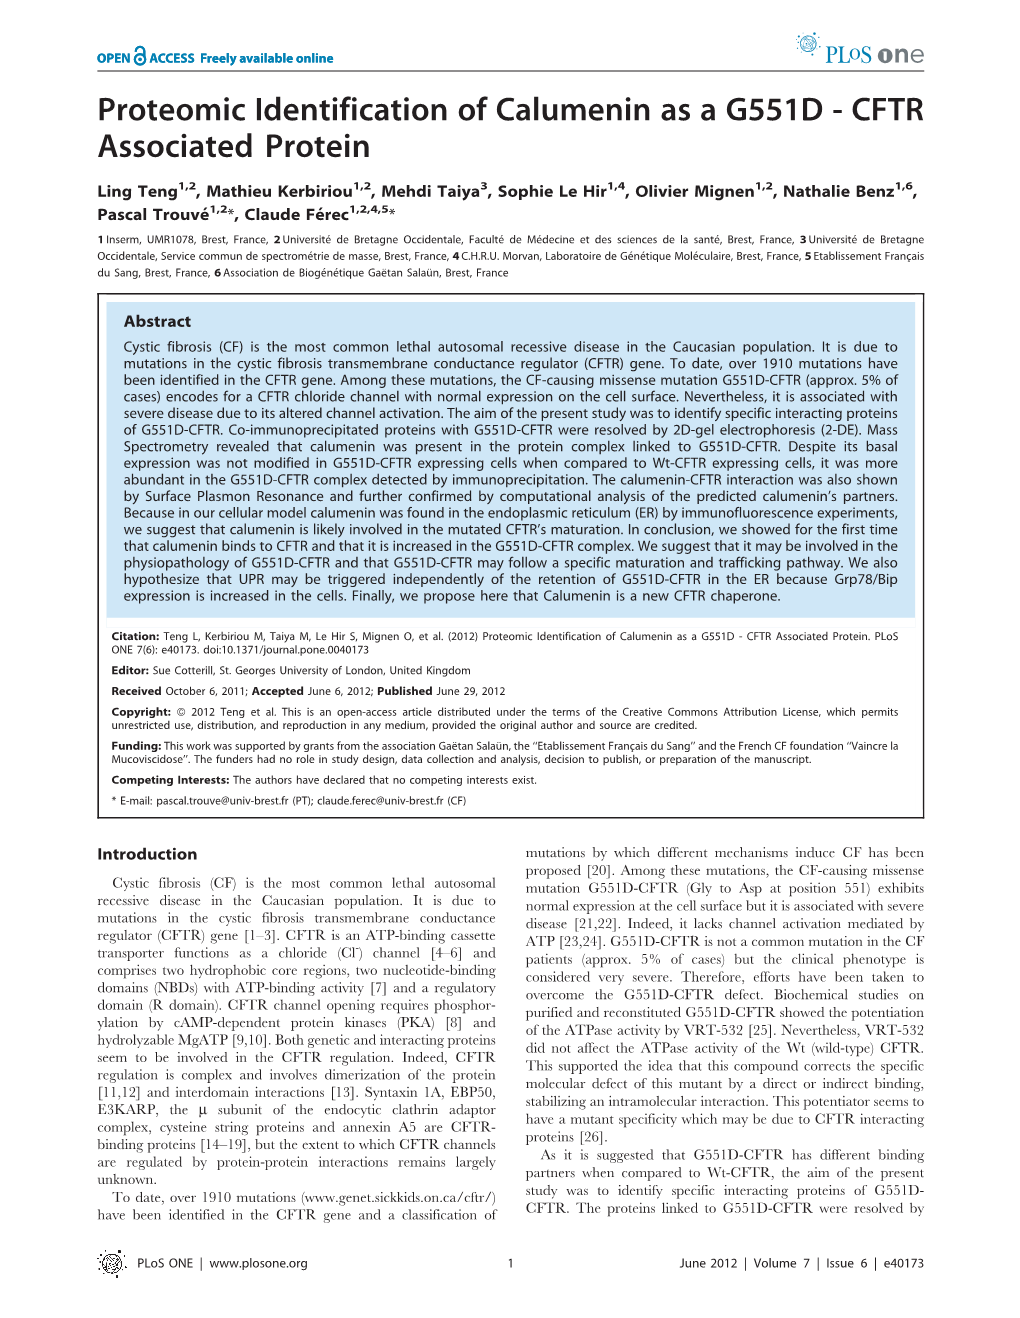 Proteomic Identification of Calumenin As a G551D - CFTR Associated Protein